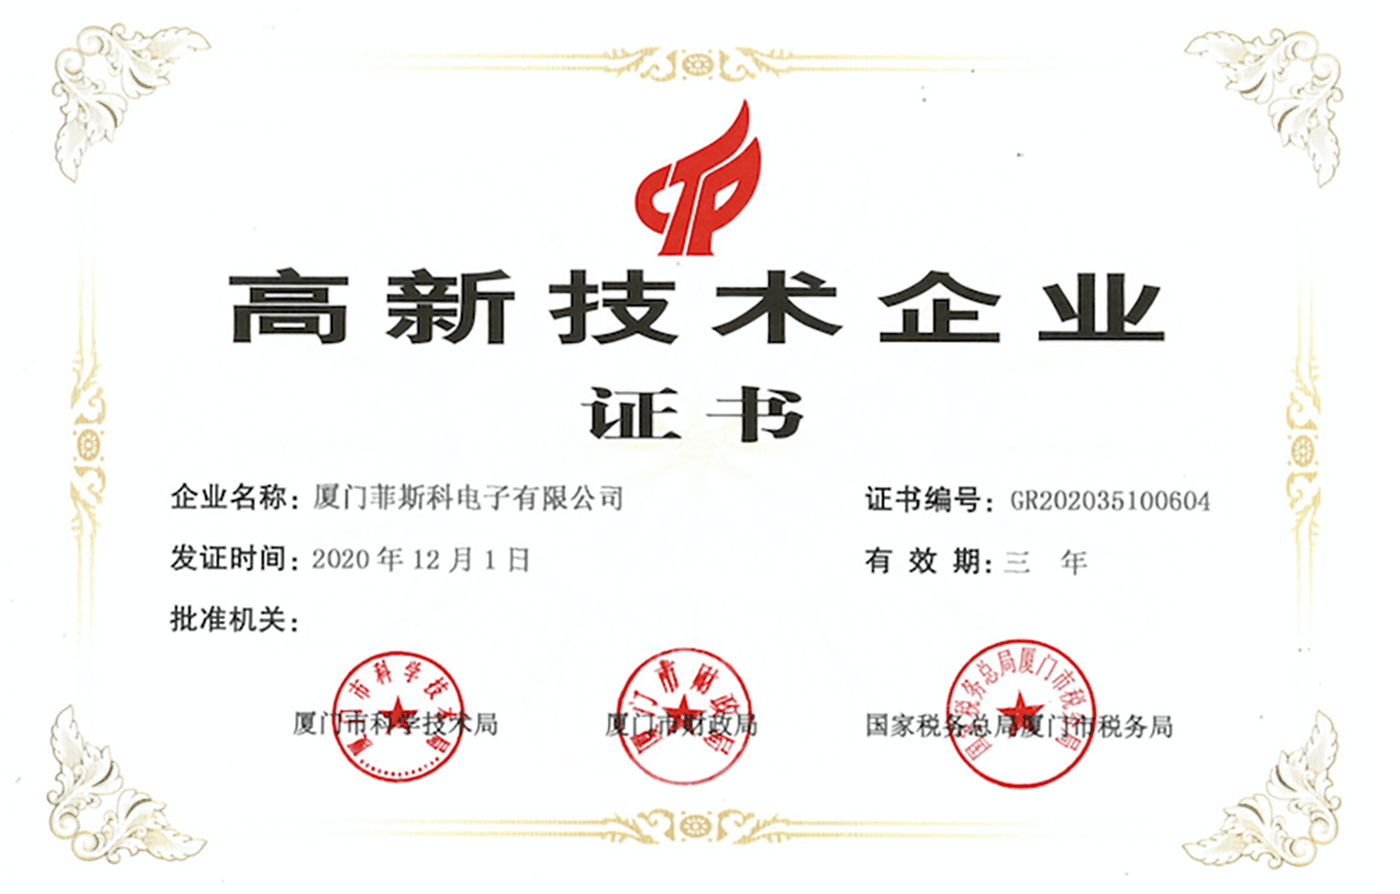 Certificate of high-tech enterprise.png